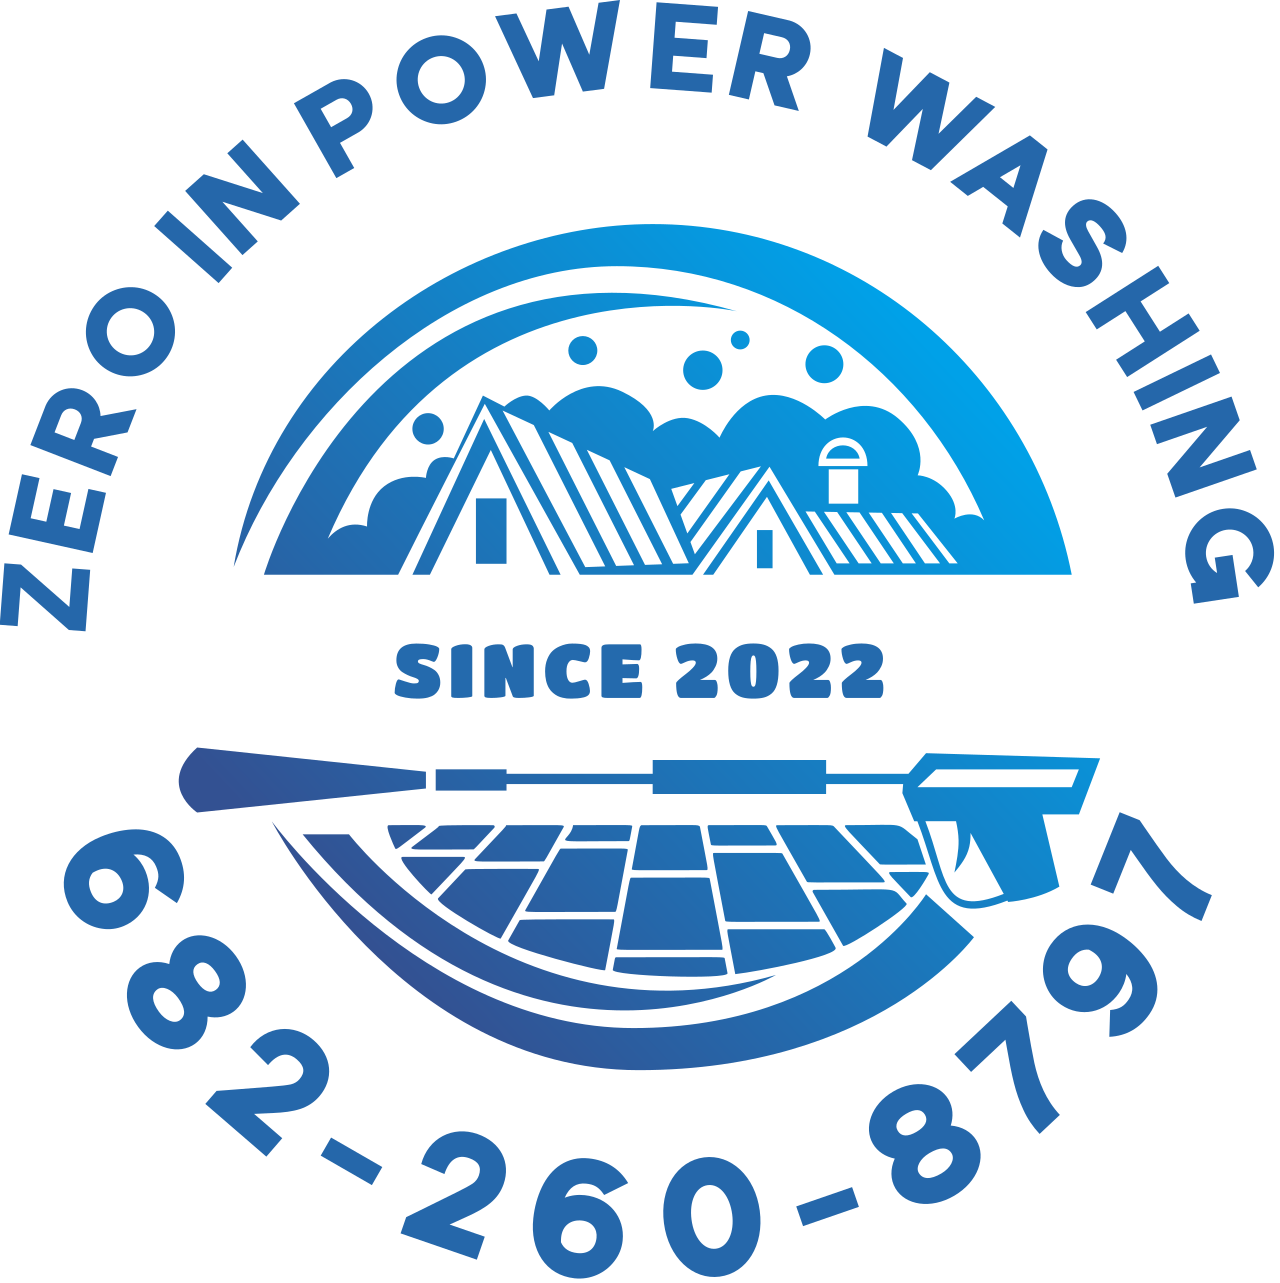 ZERO IN POWER WASHING 's logo